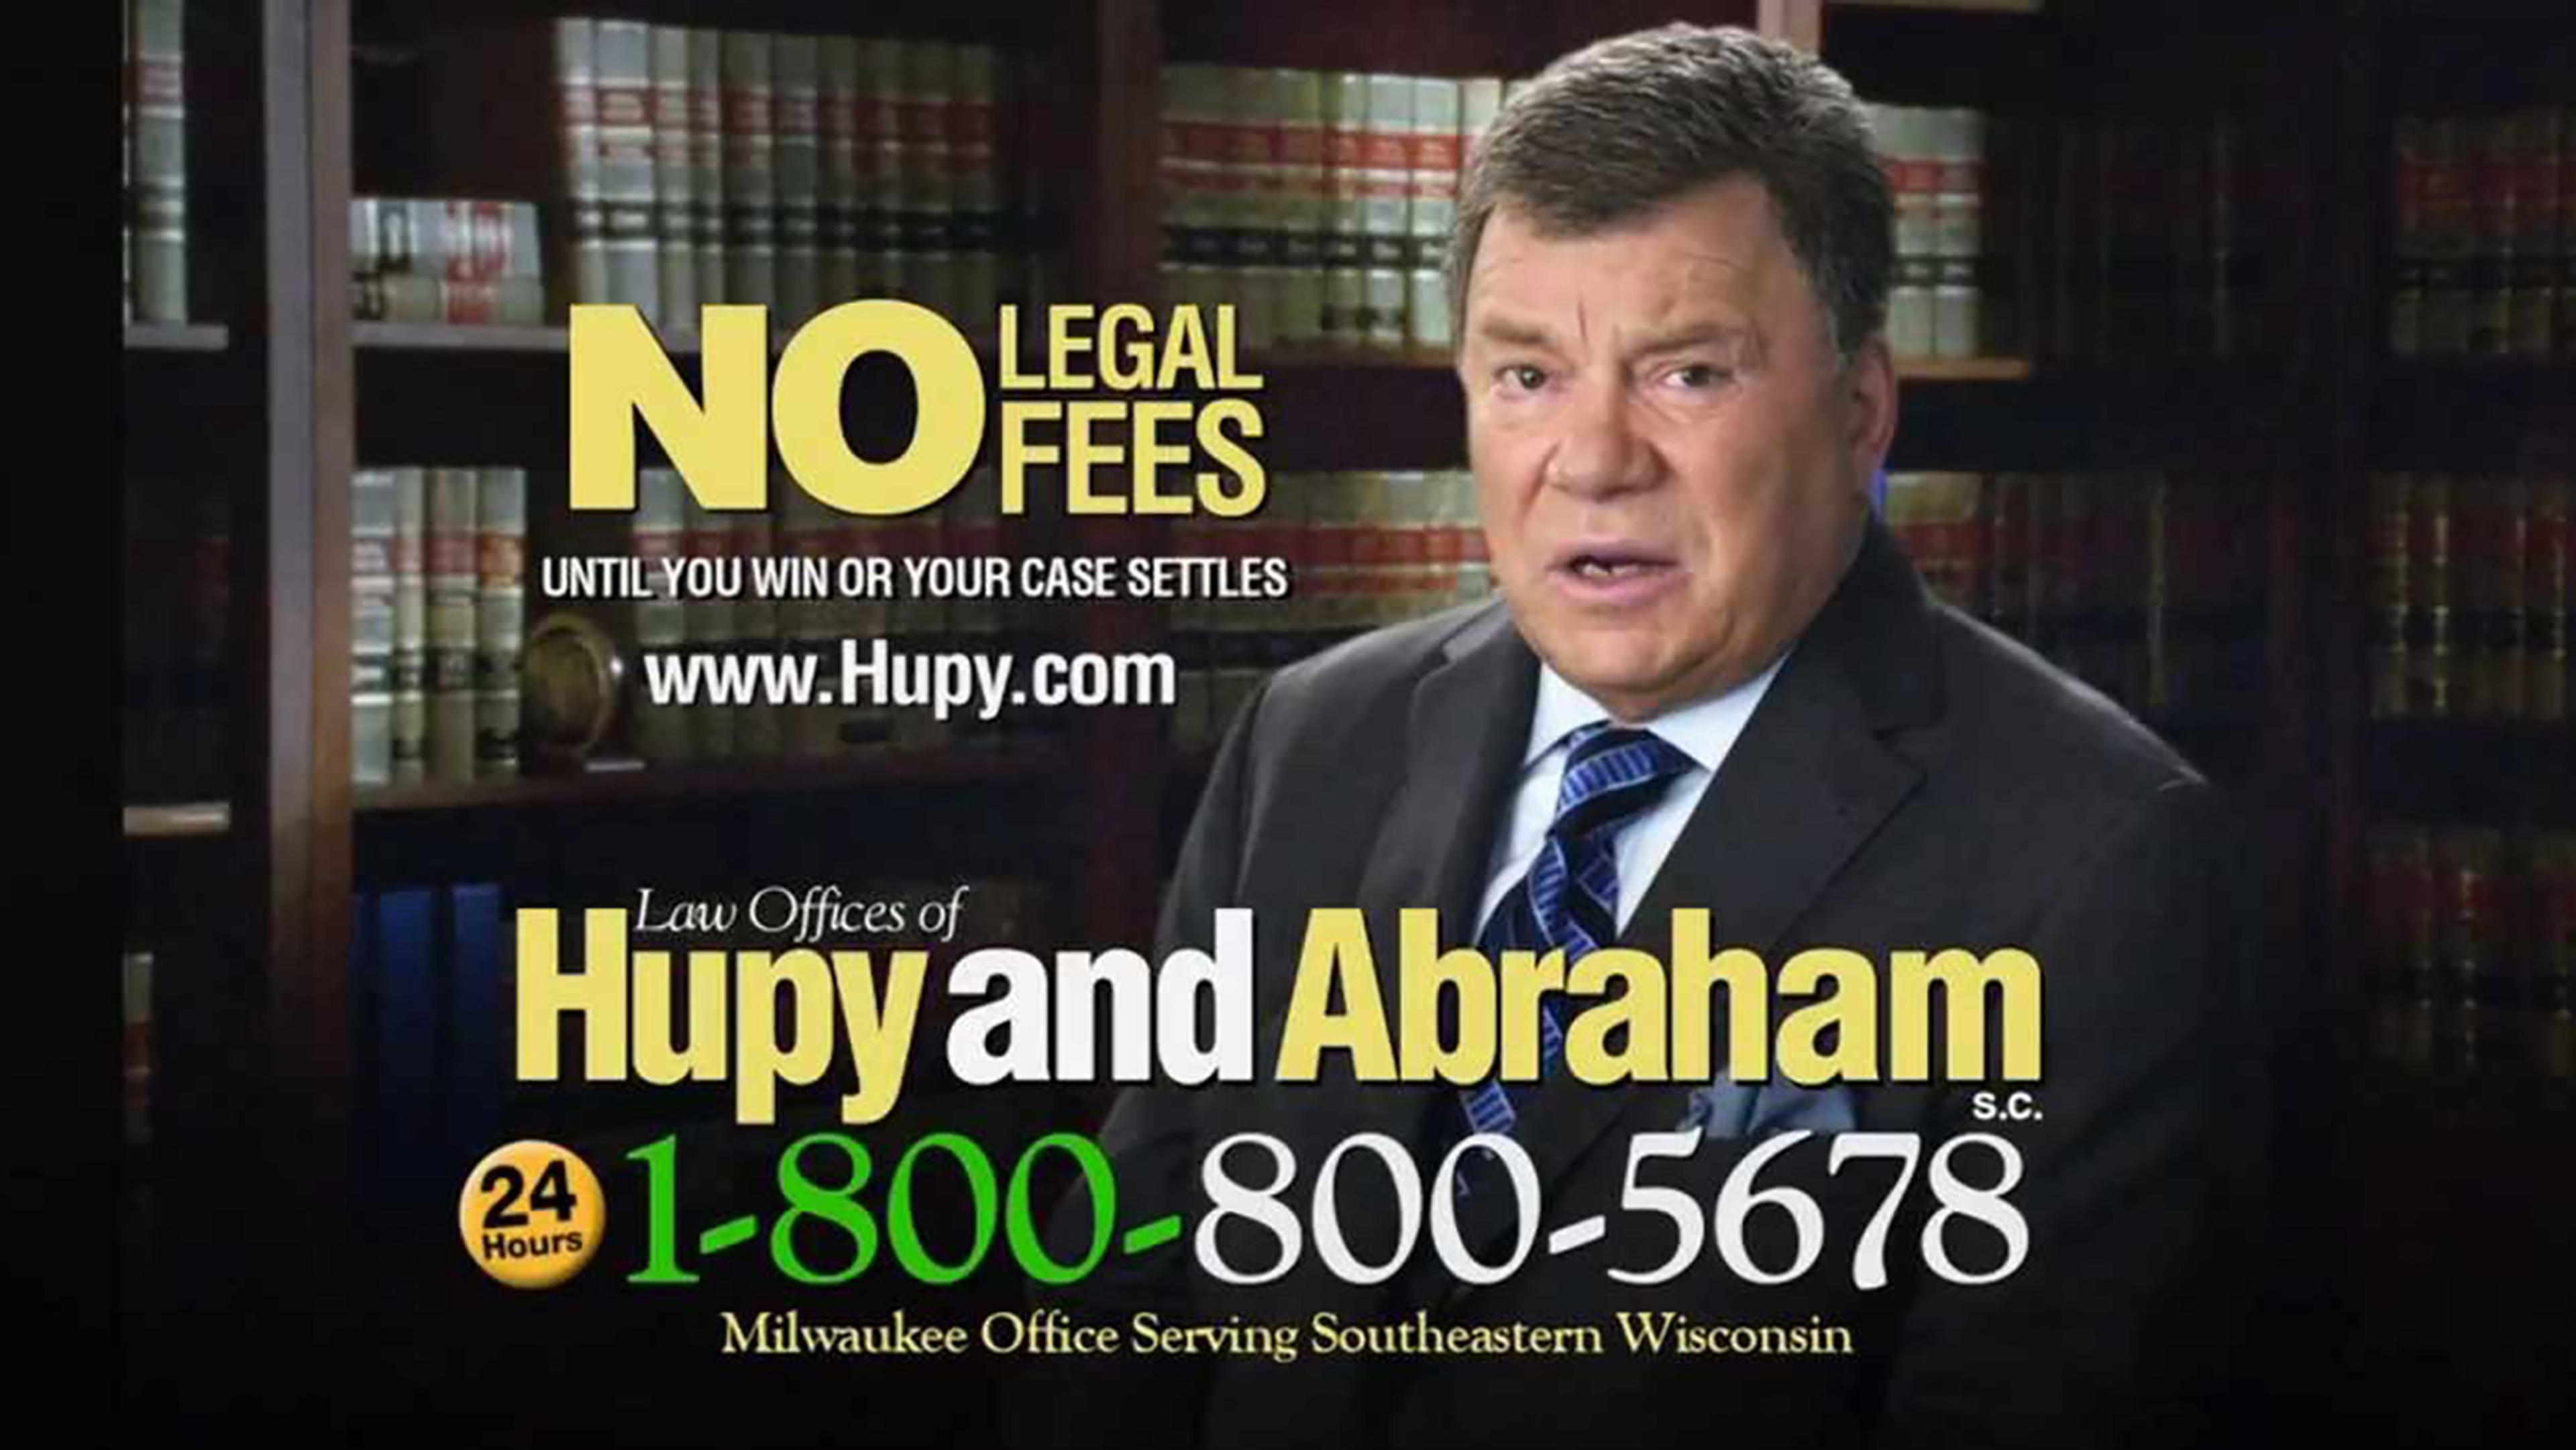 Hupy and Abraham ad